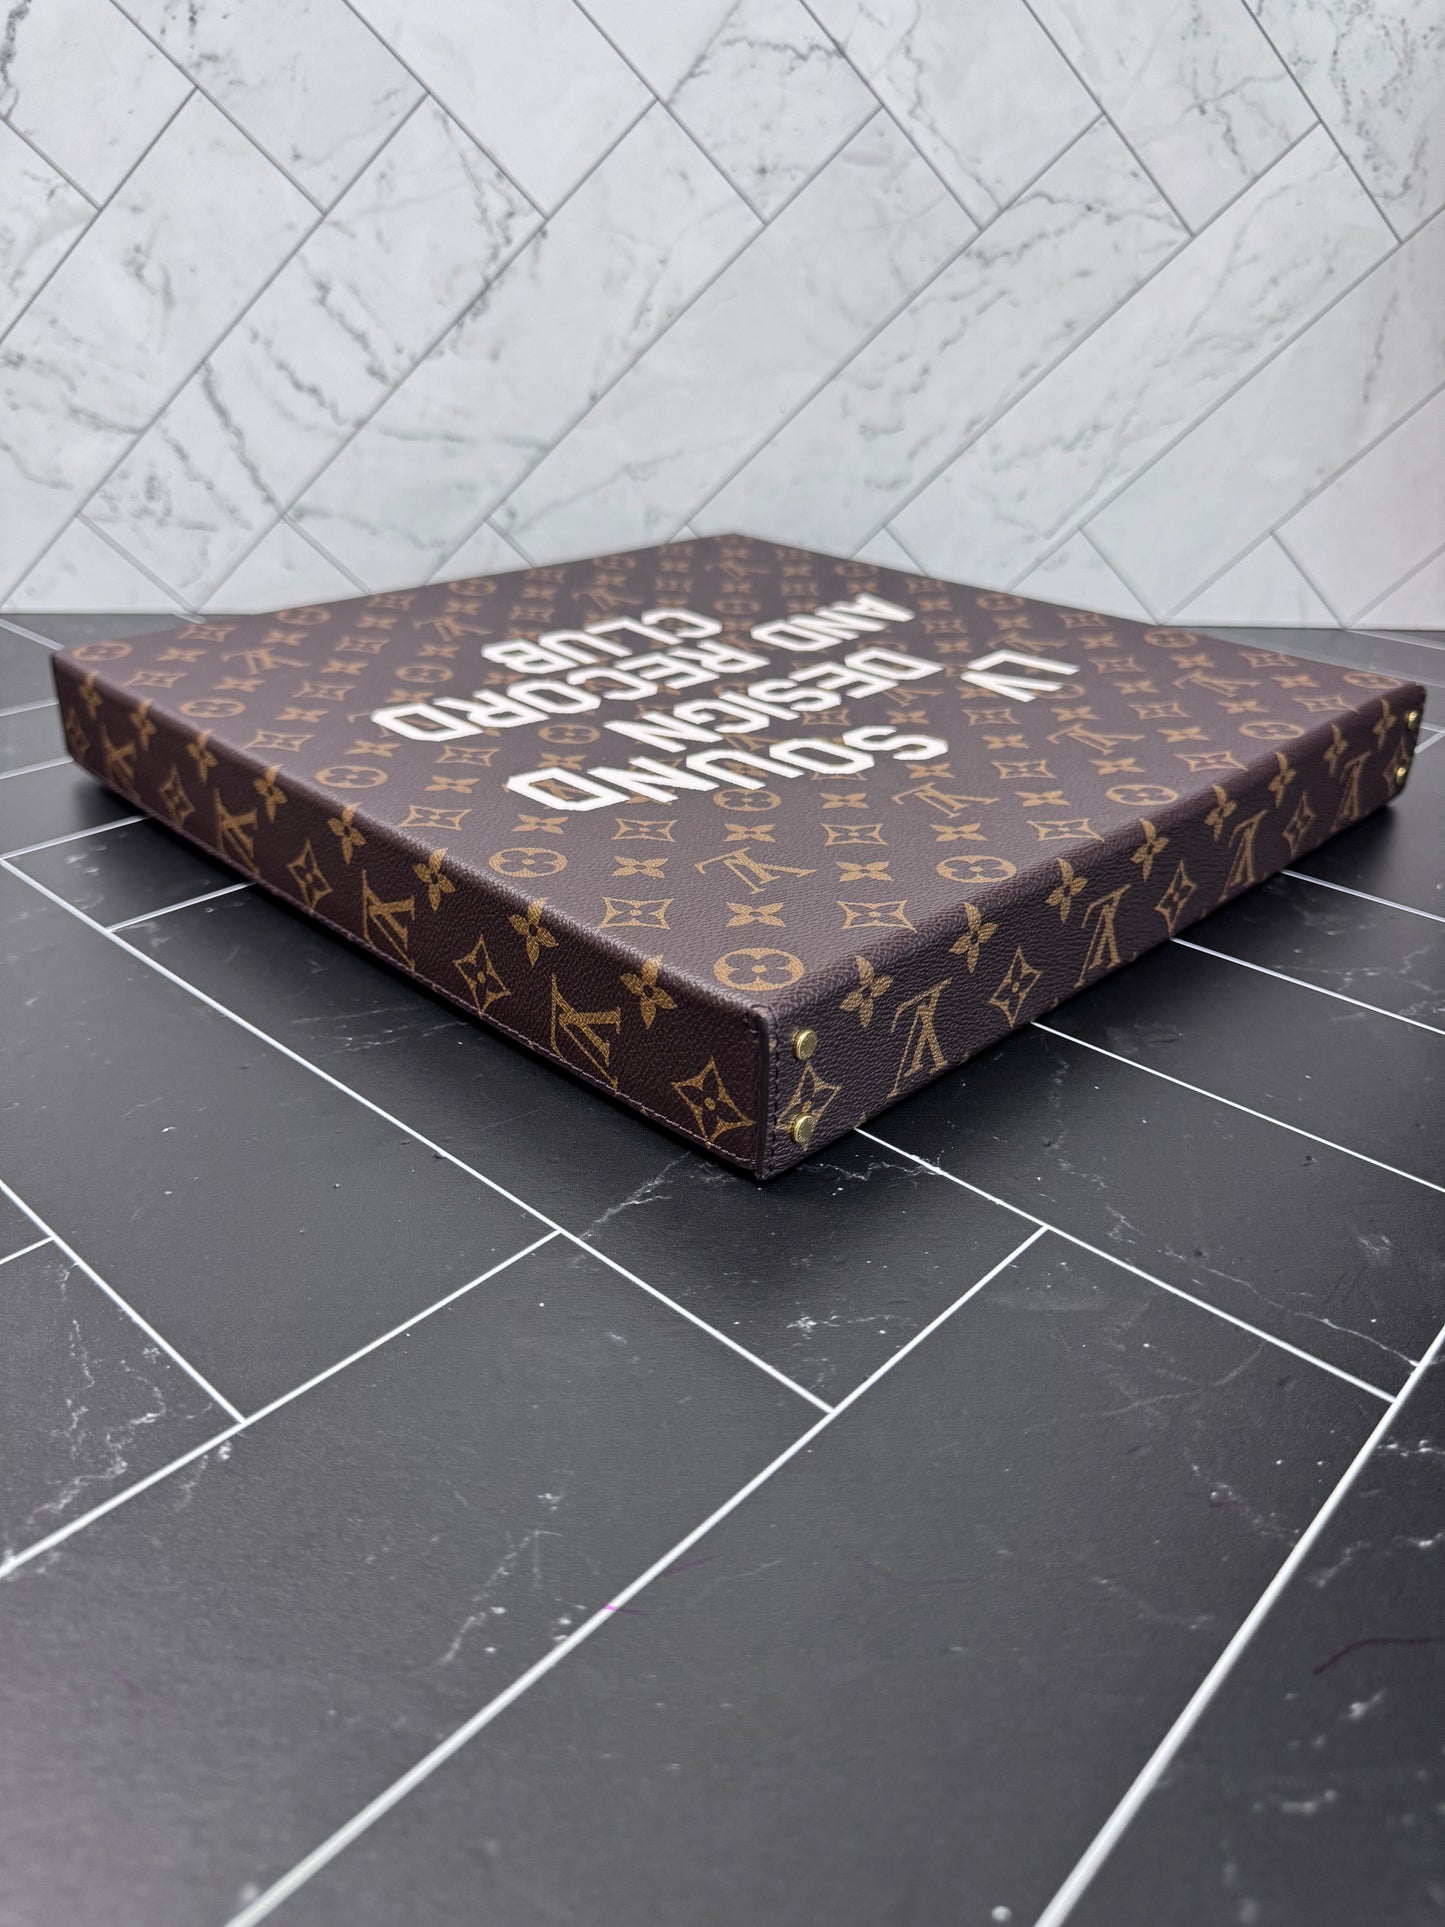 BRAND NEW Louis Vuitton Monogram Record Pizza Box